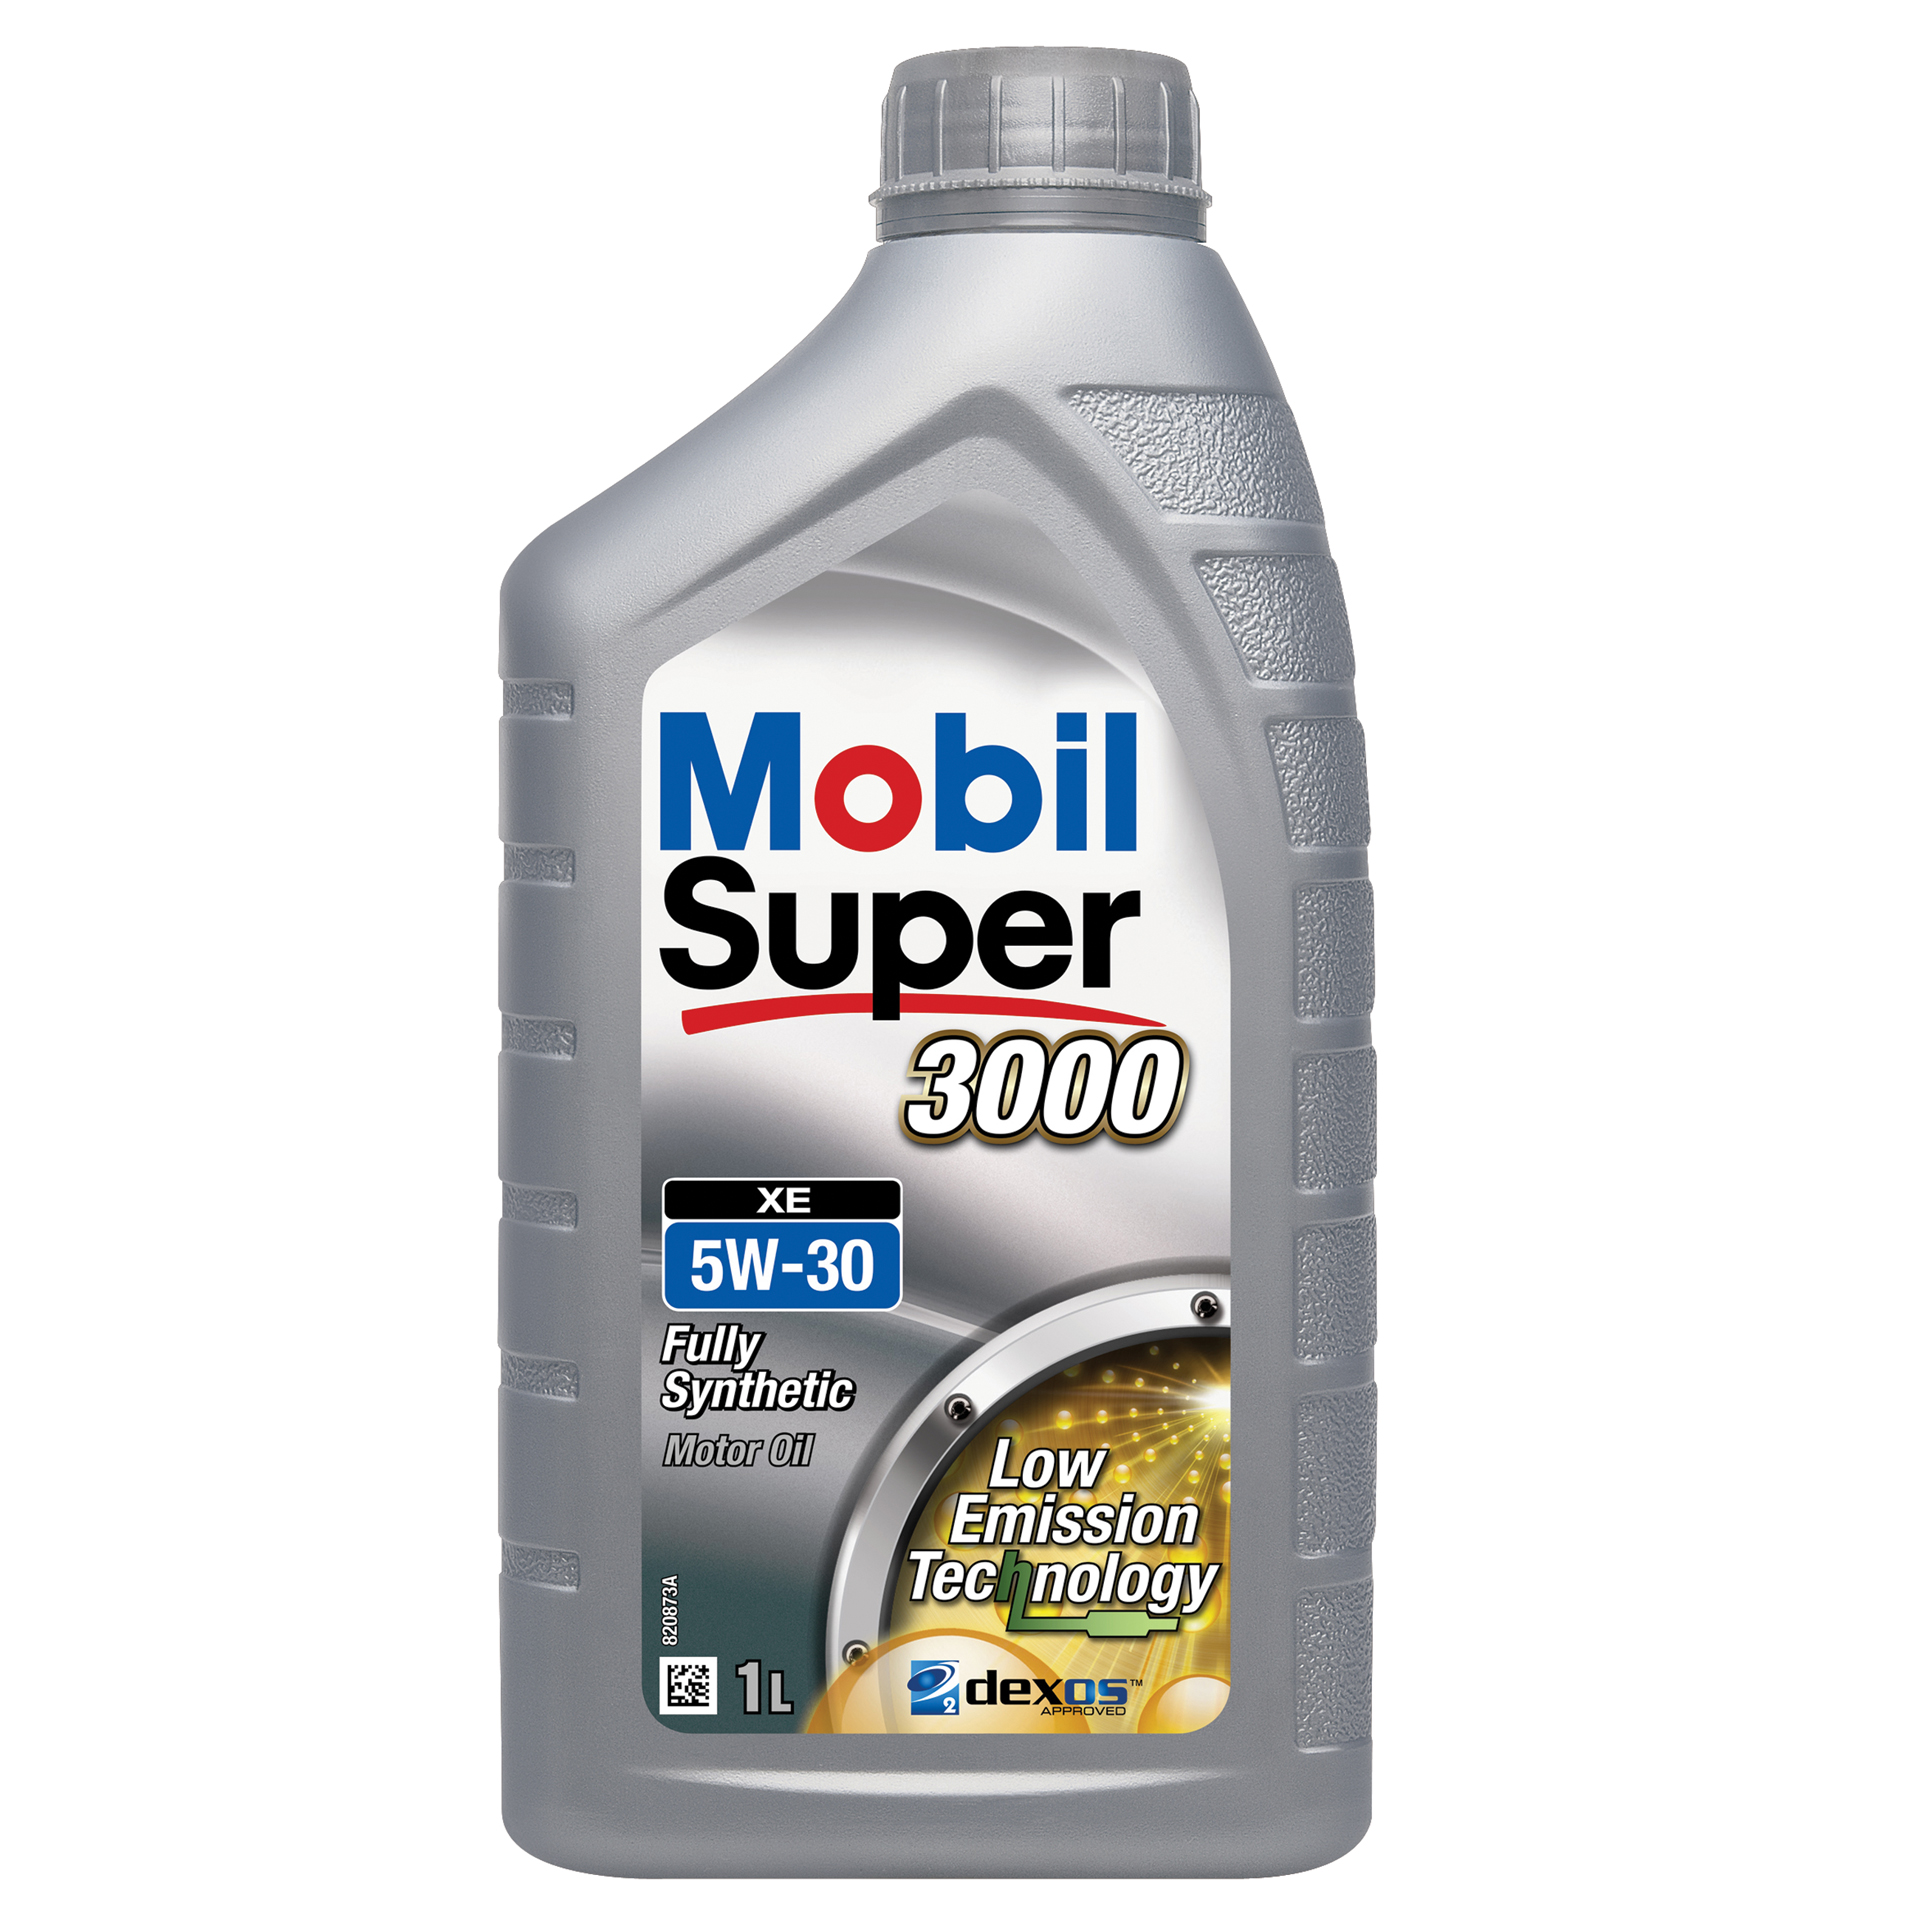 Mobil Mobil Motorolie Super 3000 XE 5W30 GSP 1 liter 1841090